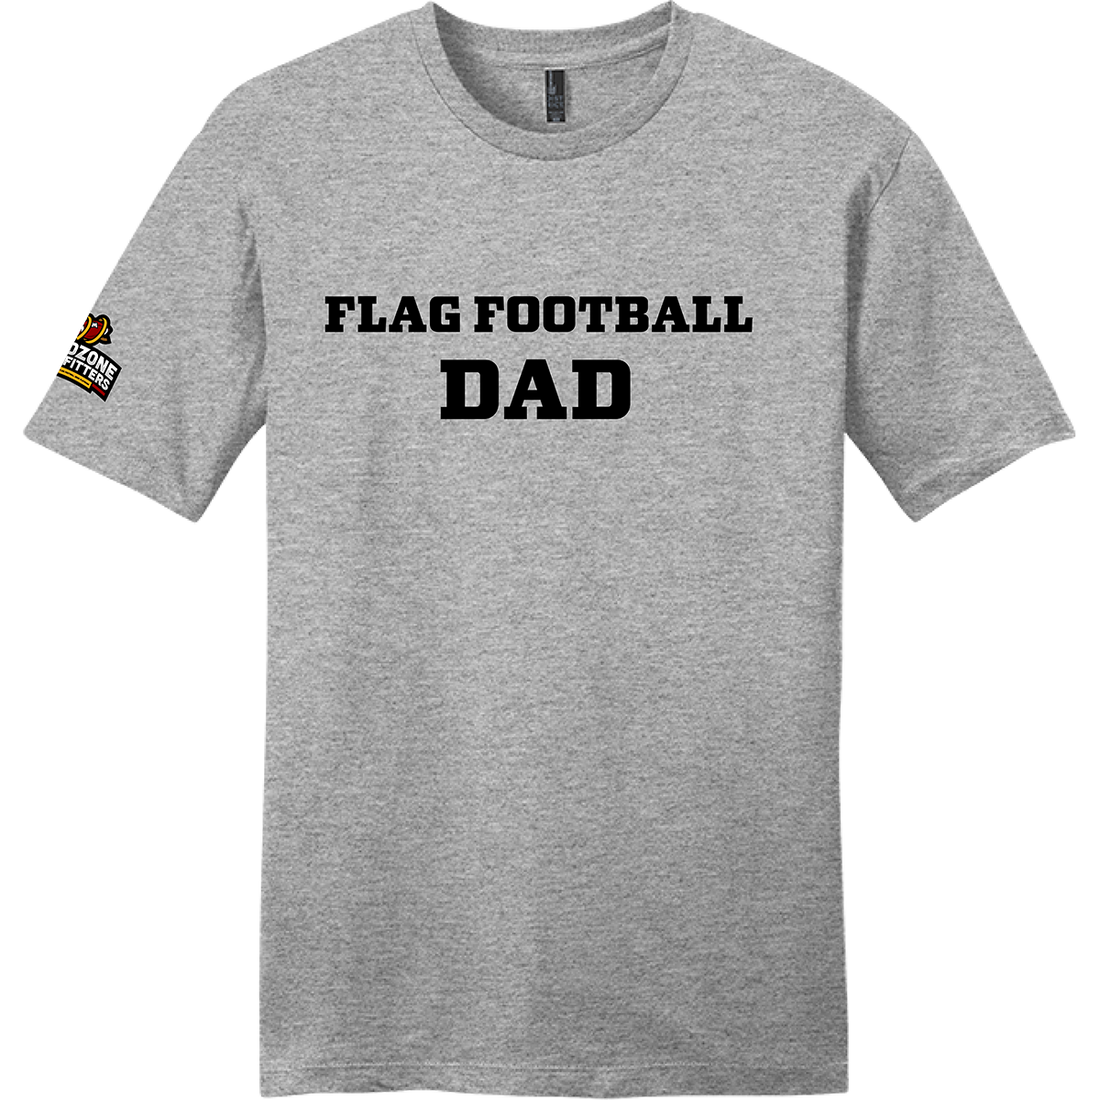 Flag Football Dad - Short Sleeve Shirt